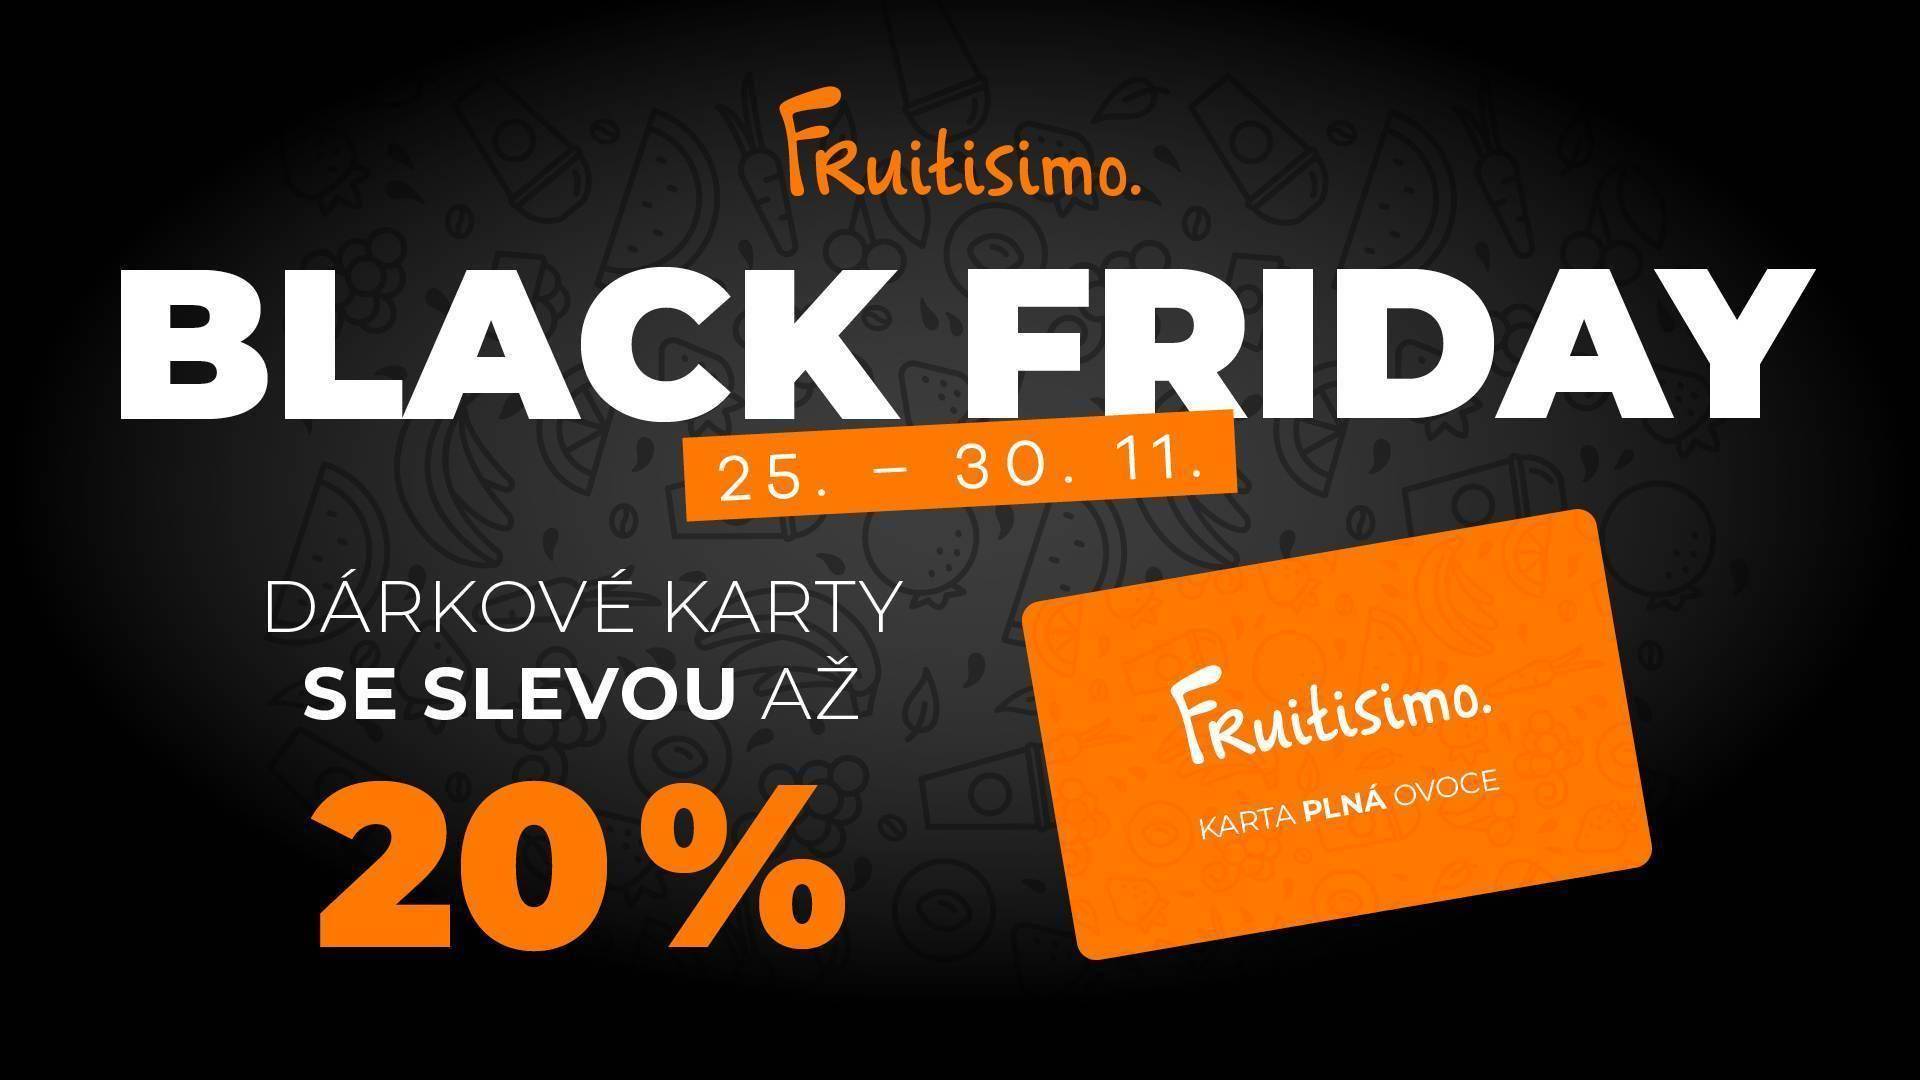 Black Friday Fruitisimo | Obchodní centrum Europark